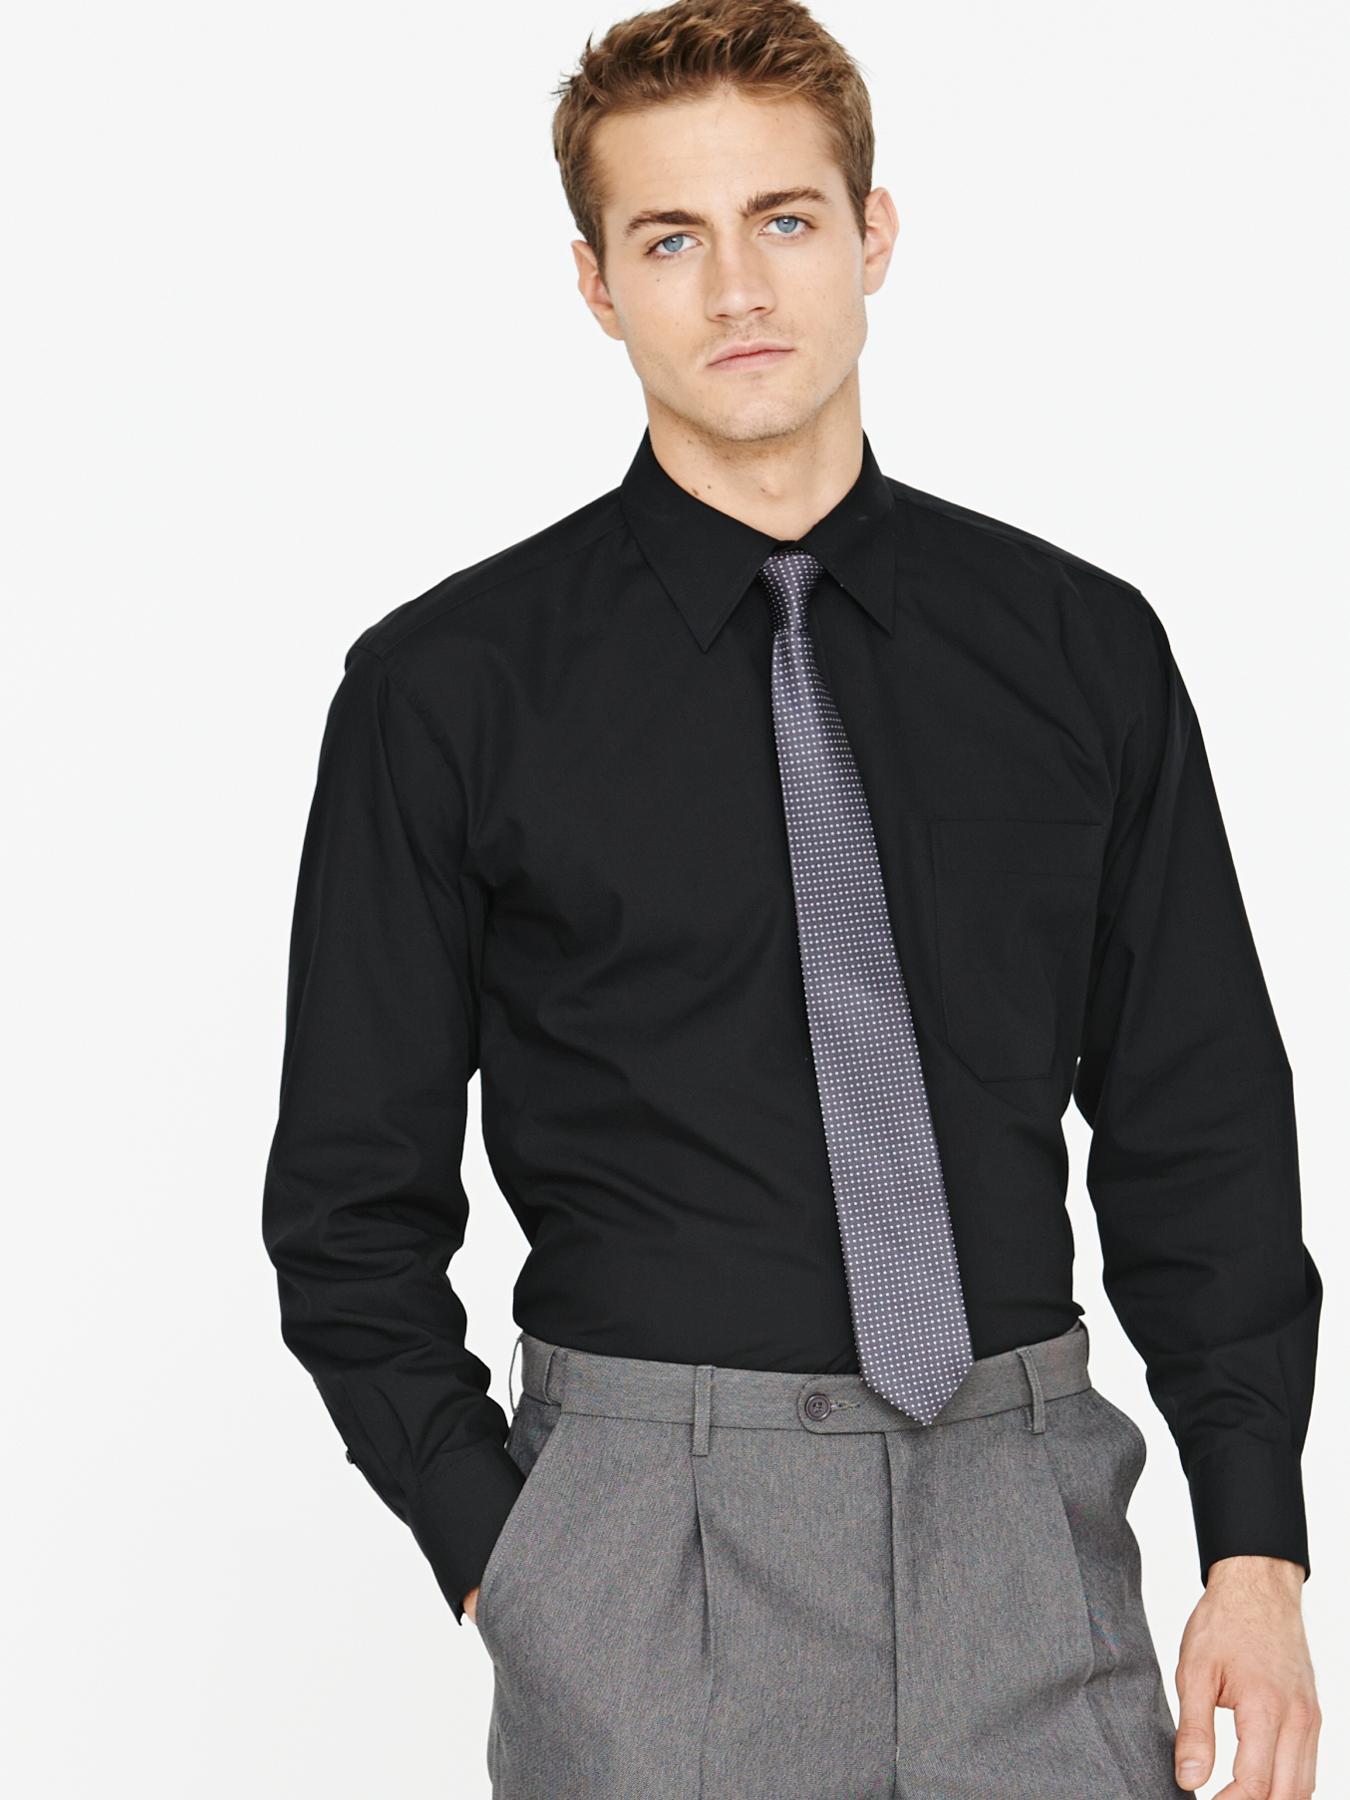 Black Tie Black Shirt Custom Shirt